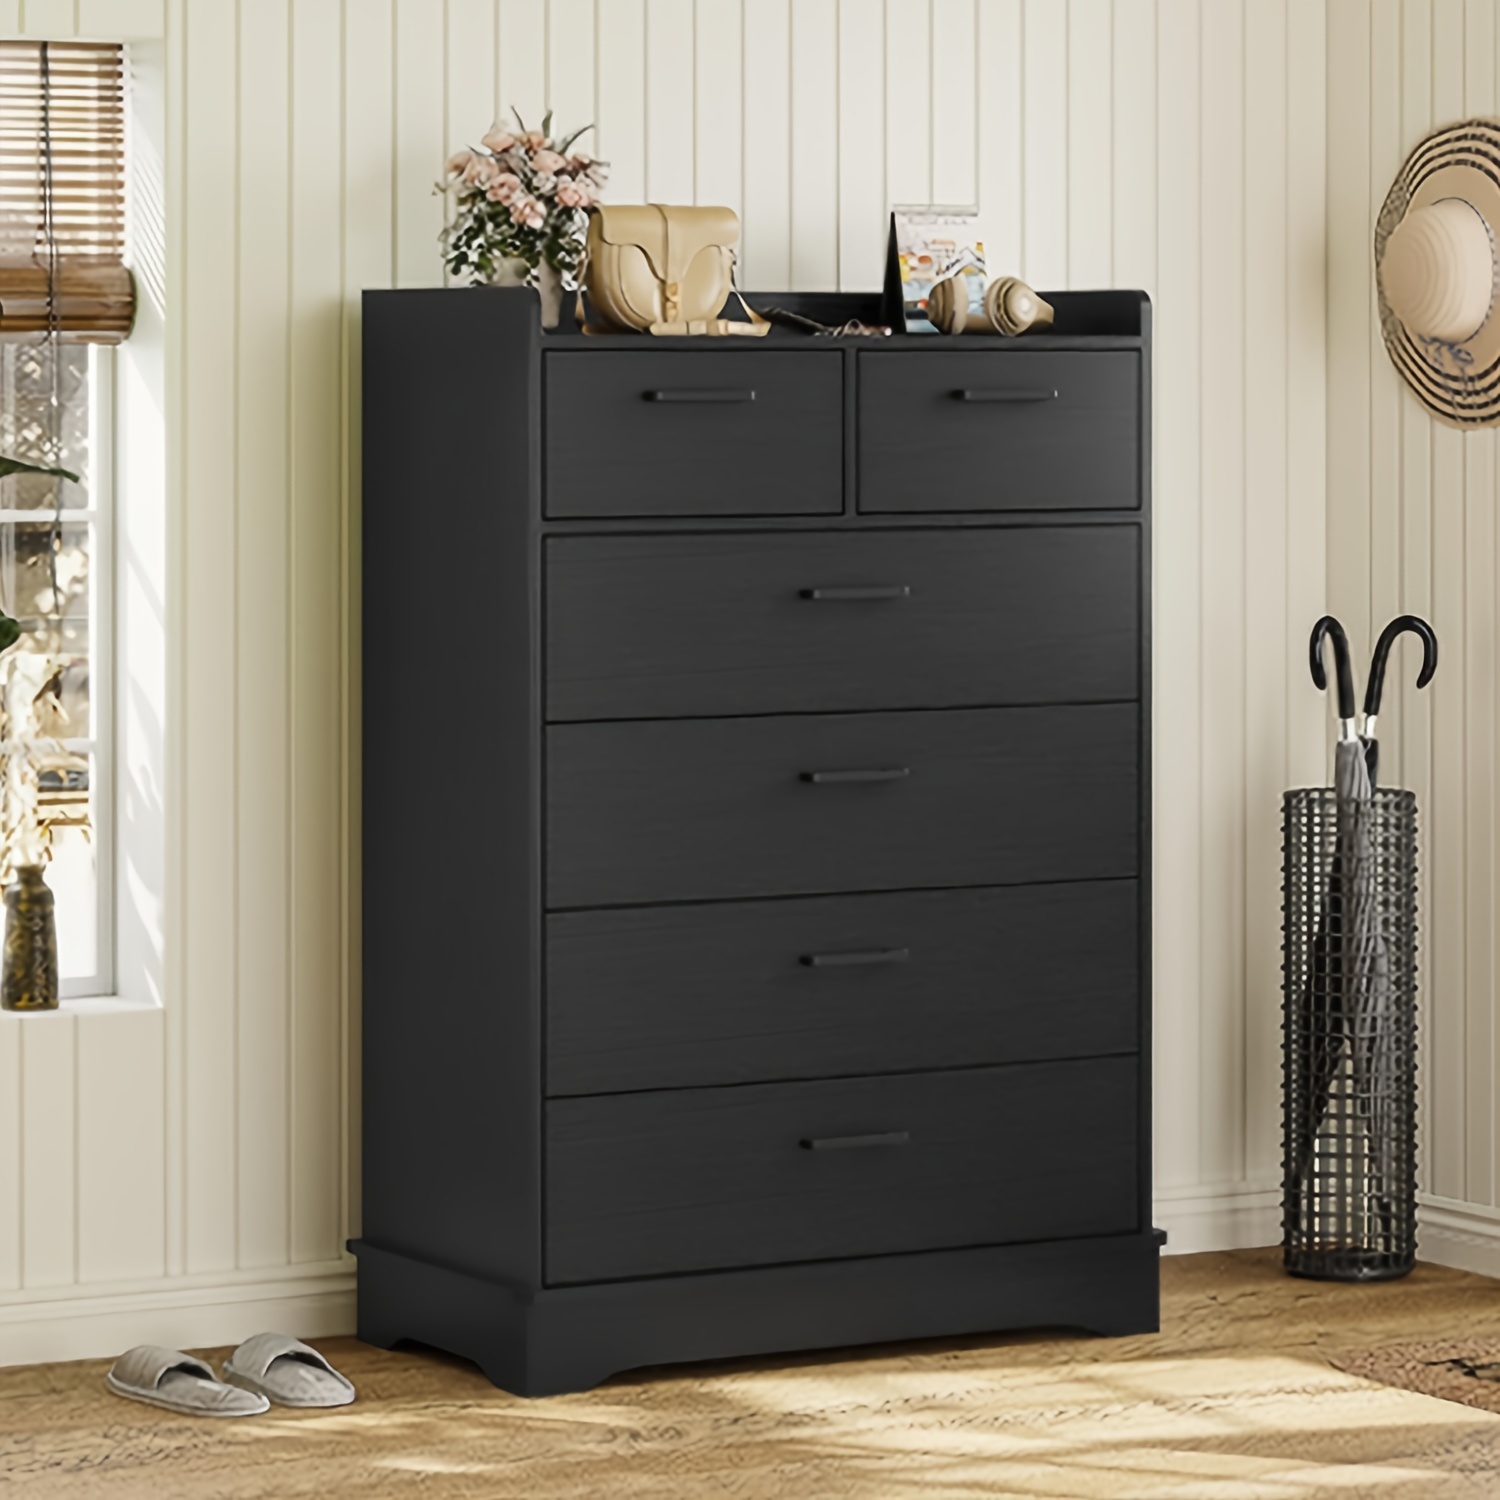 

6 Drawer Dresser Modern Chest Of Drawers Storage Organizer For Bedroom Living Room, Black Dresser